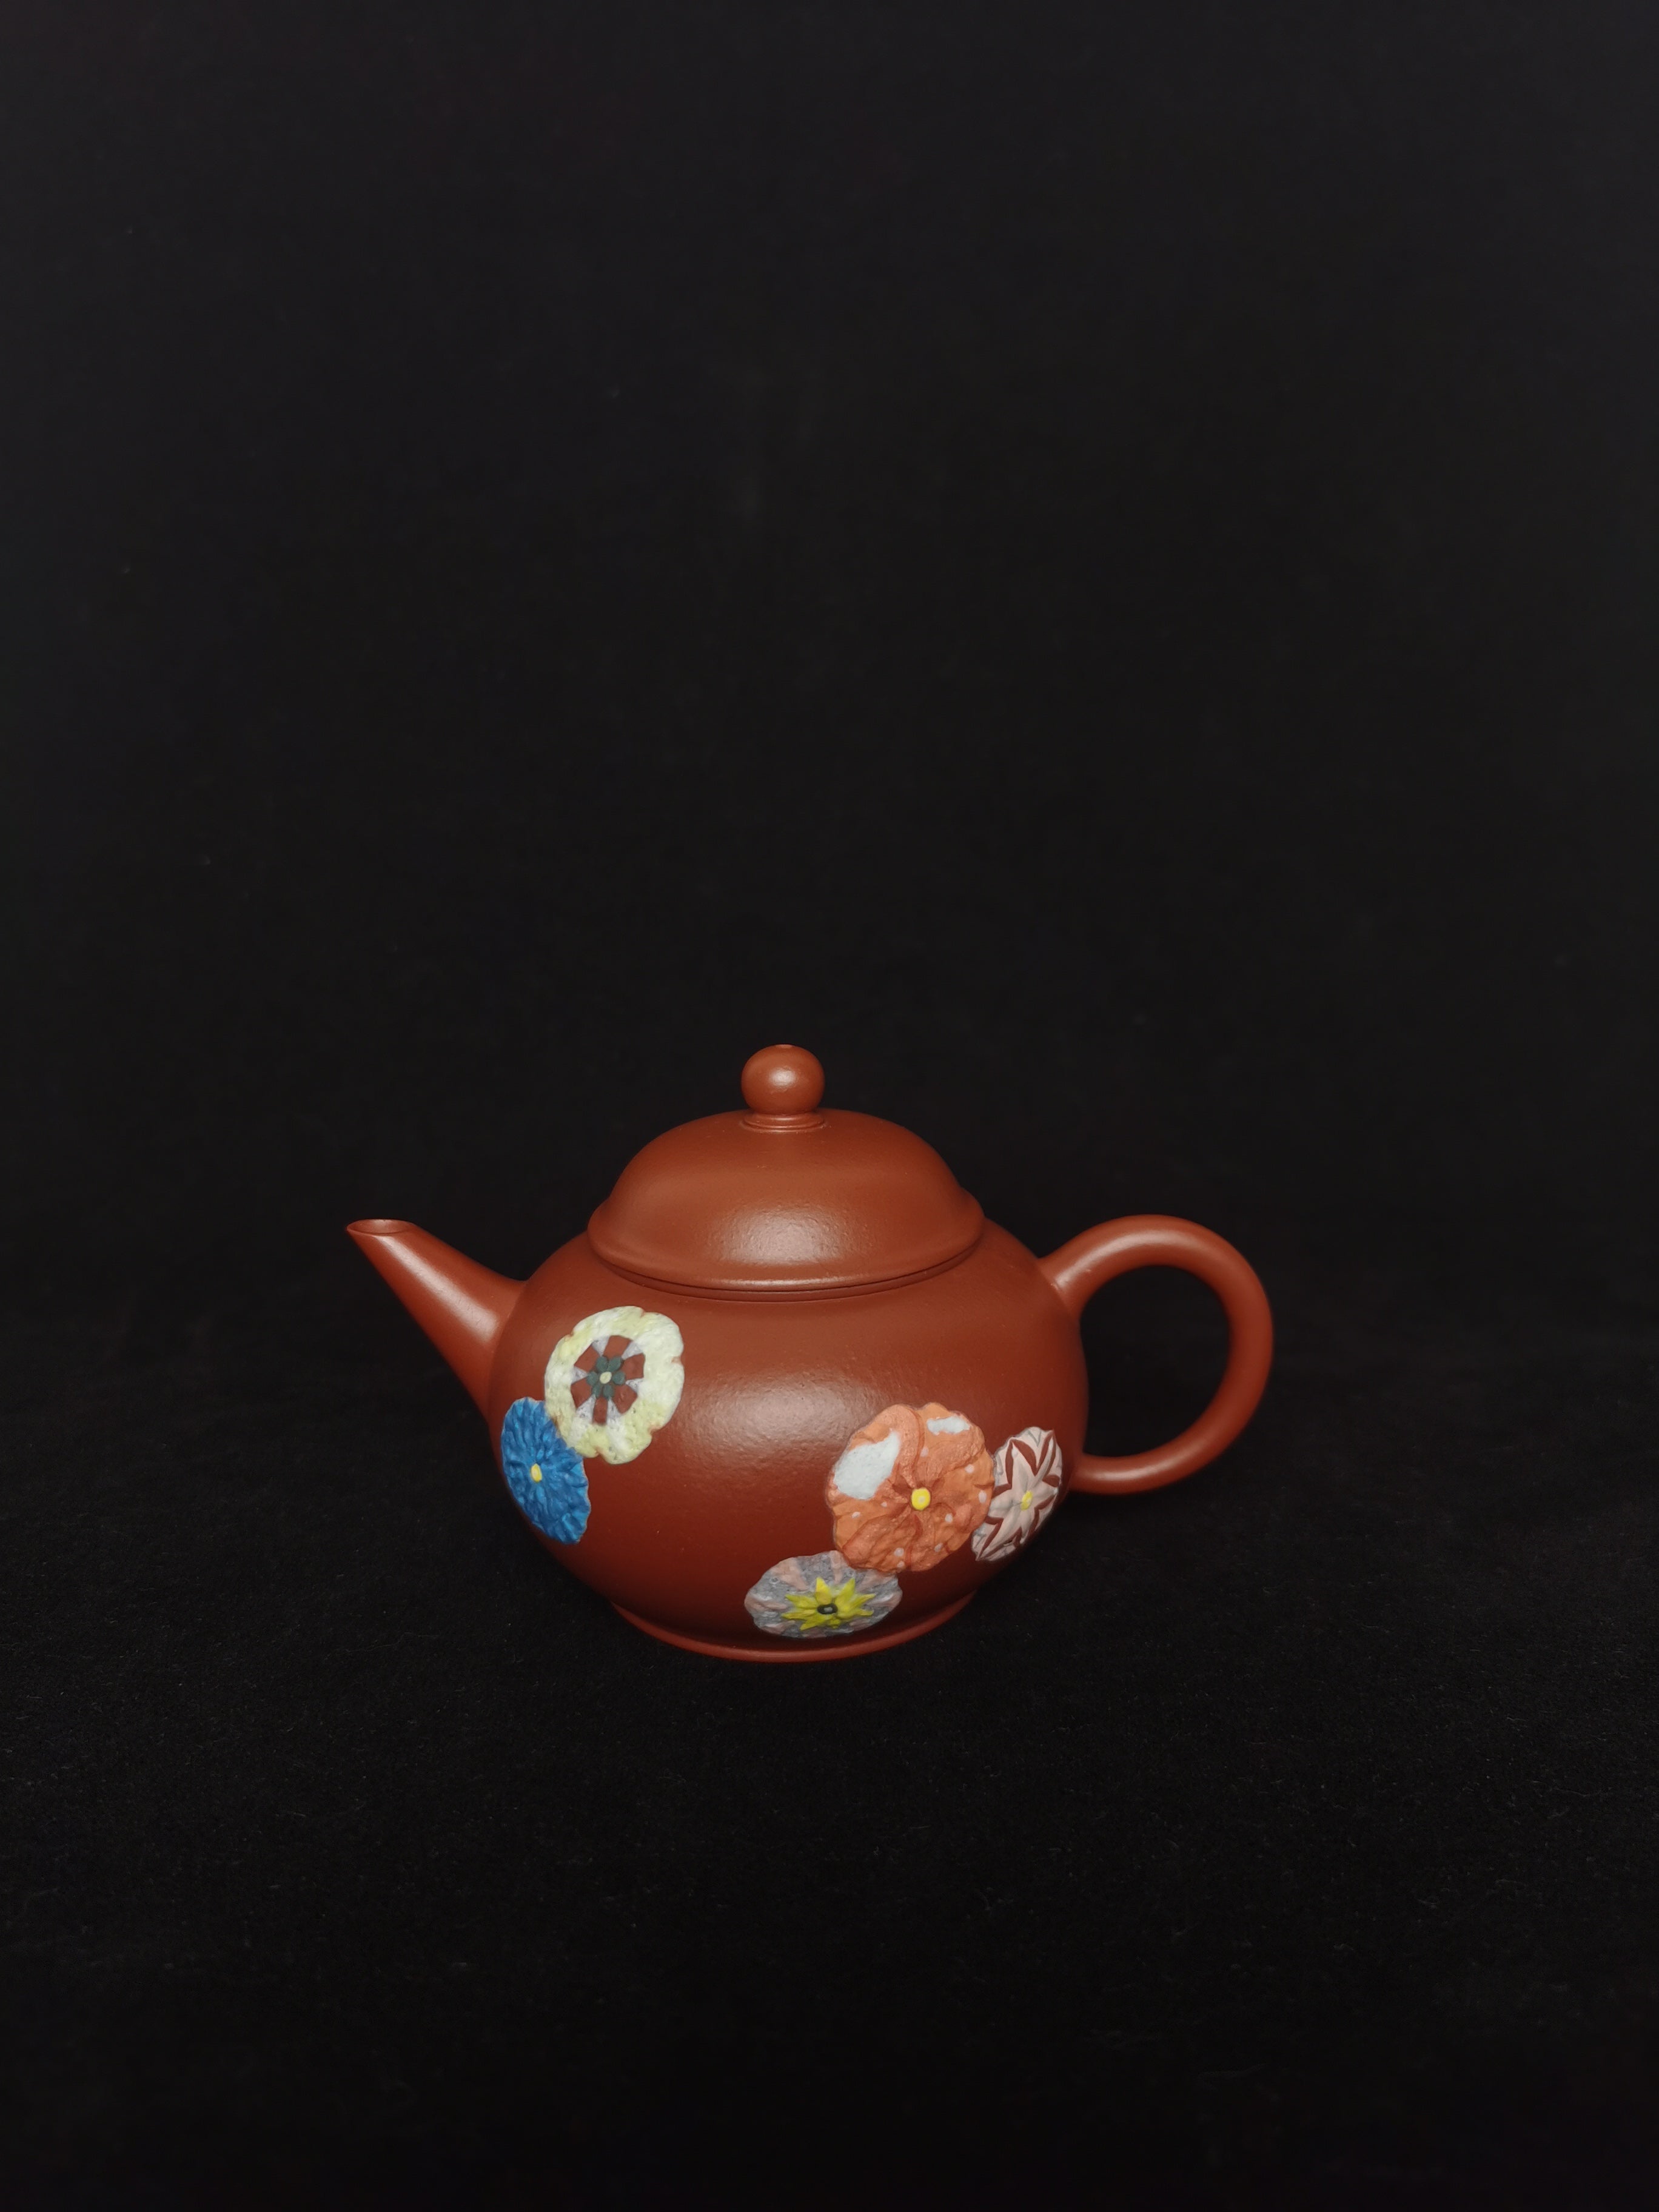 Siyutao teapot hydrangeas full handcrafted 120ml